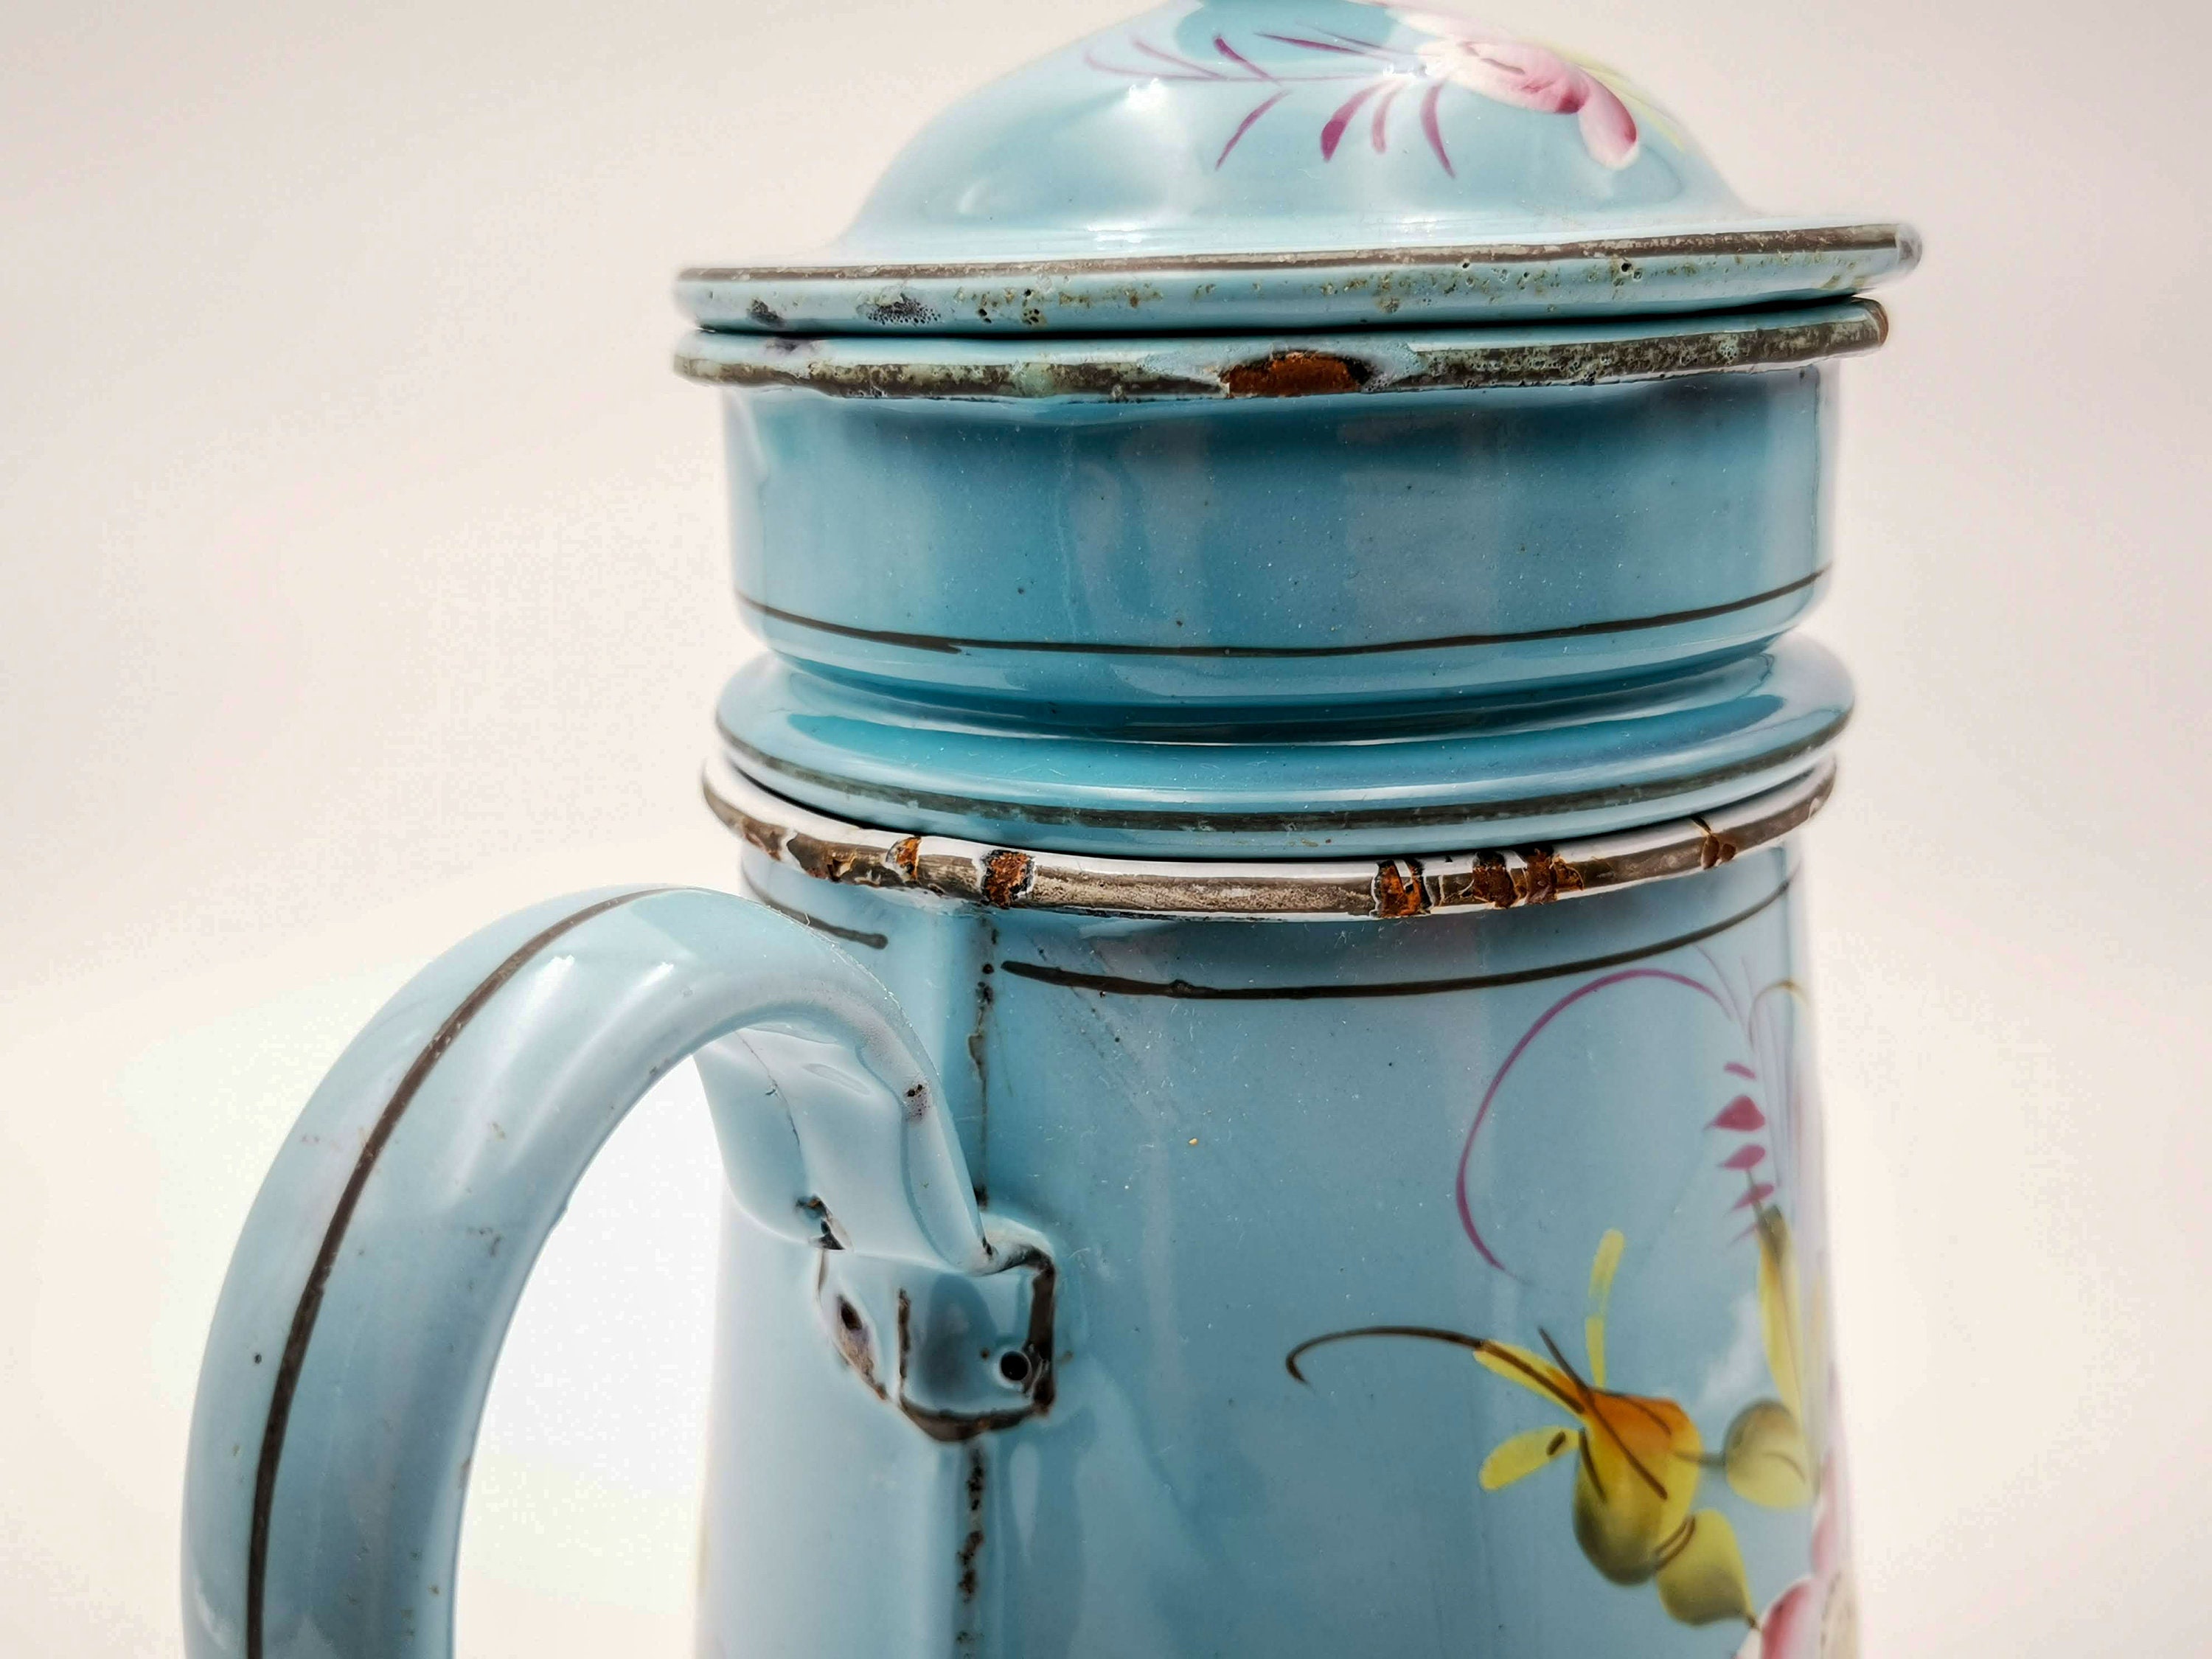 Antique French enamelware coffee pot - white 11¾ – Chez Pluie